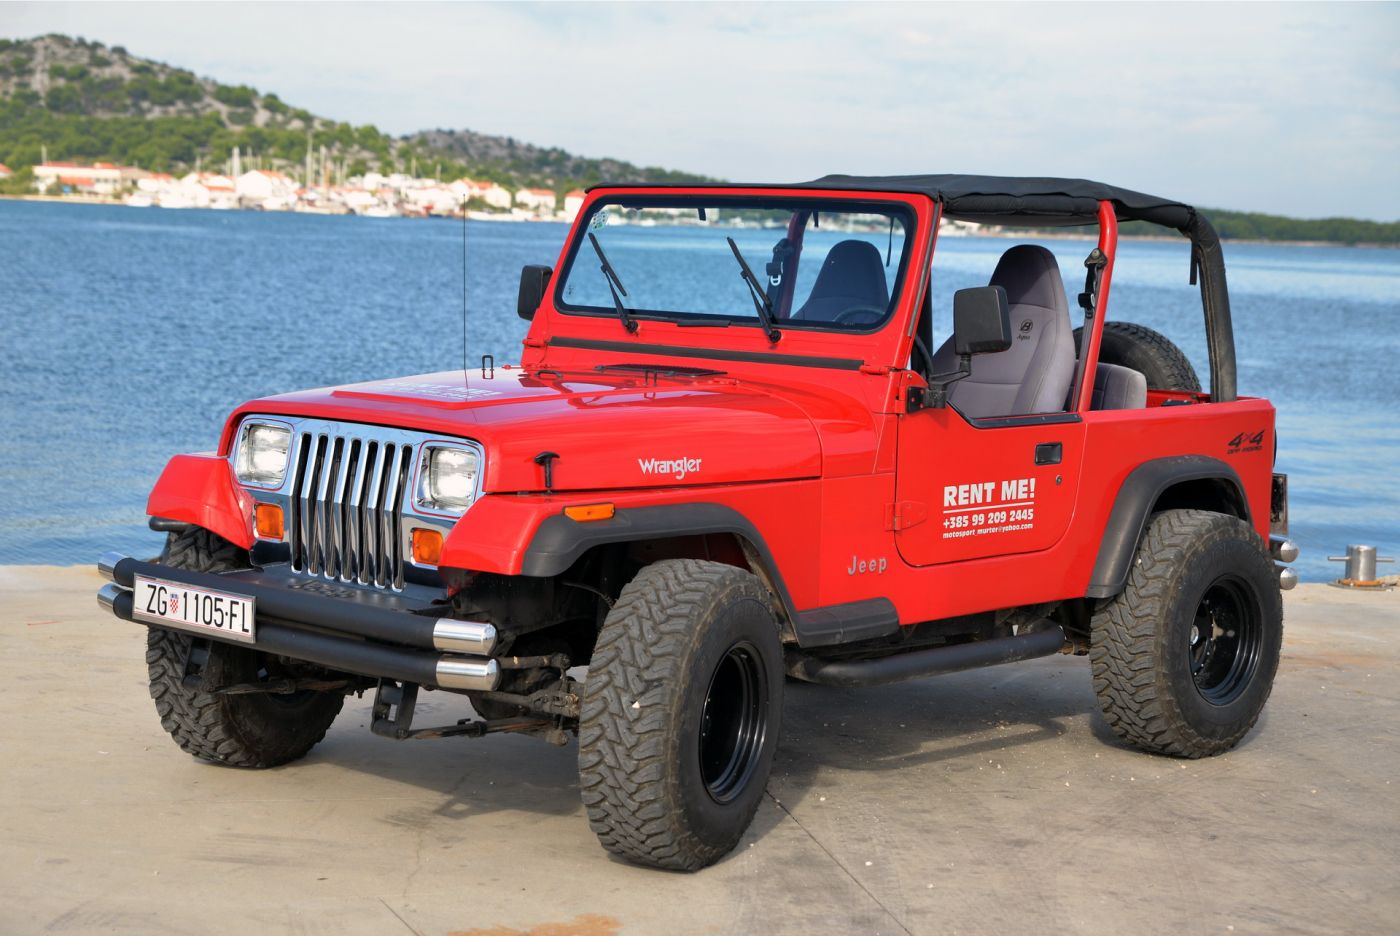 jeep - Rent a boat Murter | Moto Sport - Tourist Agency